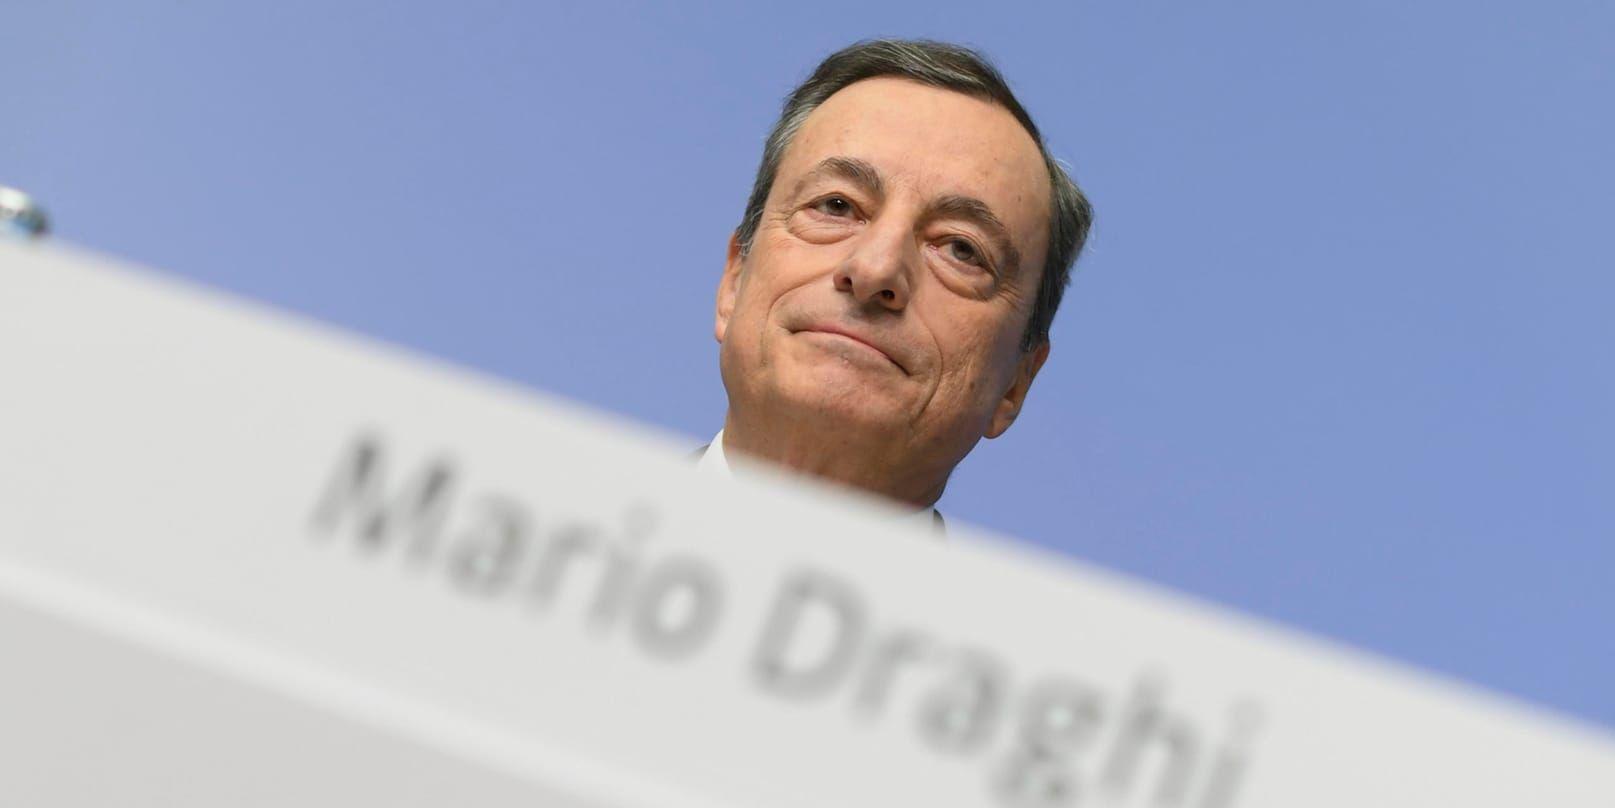 ECB:s chef Mario Draghi. Arkivbild.